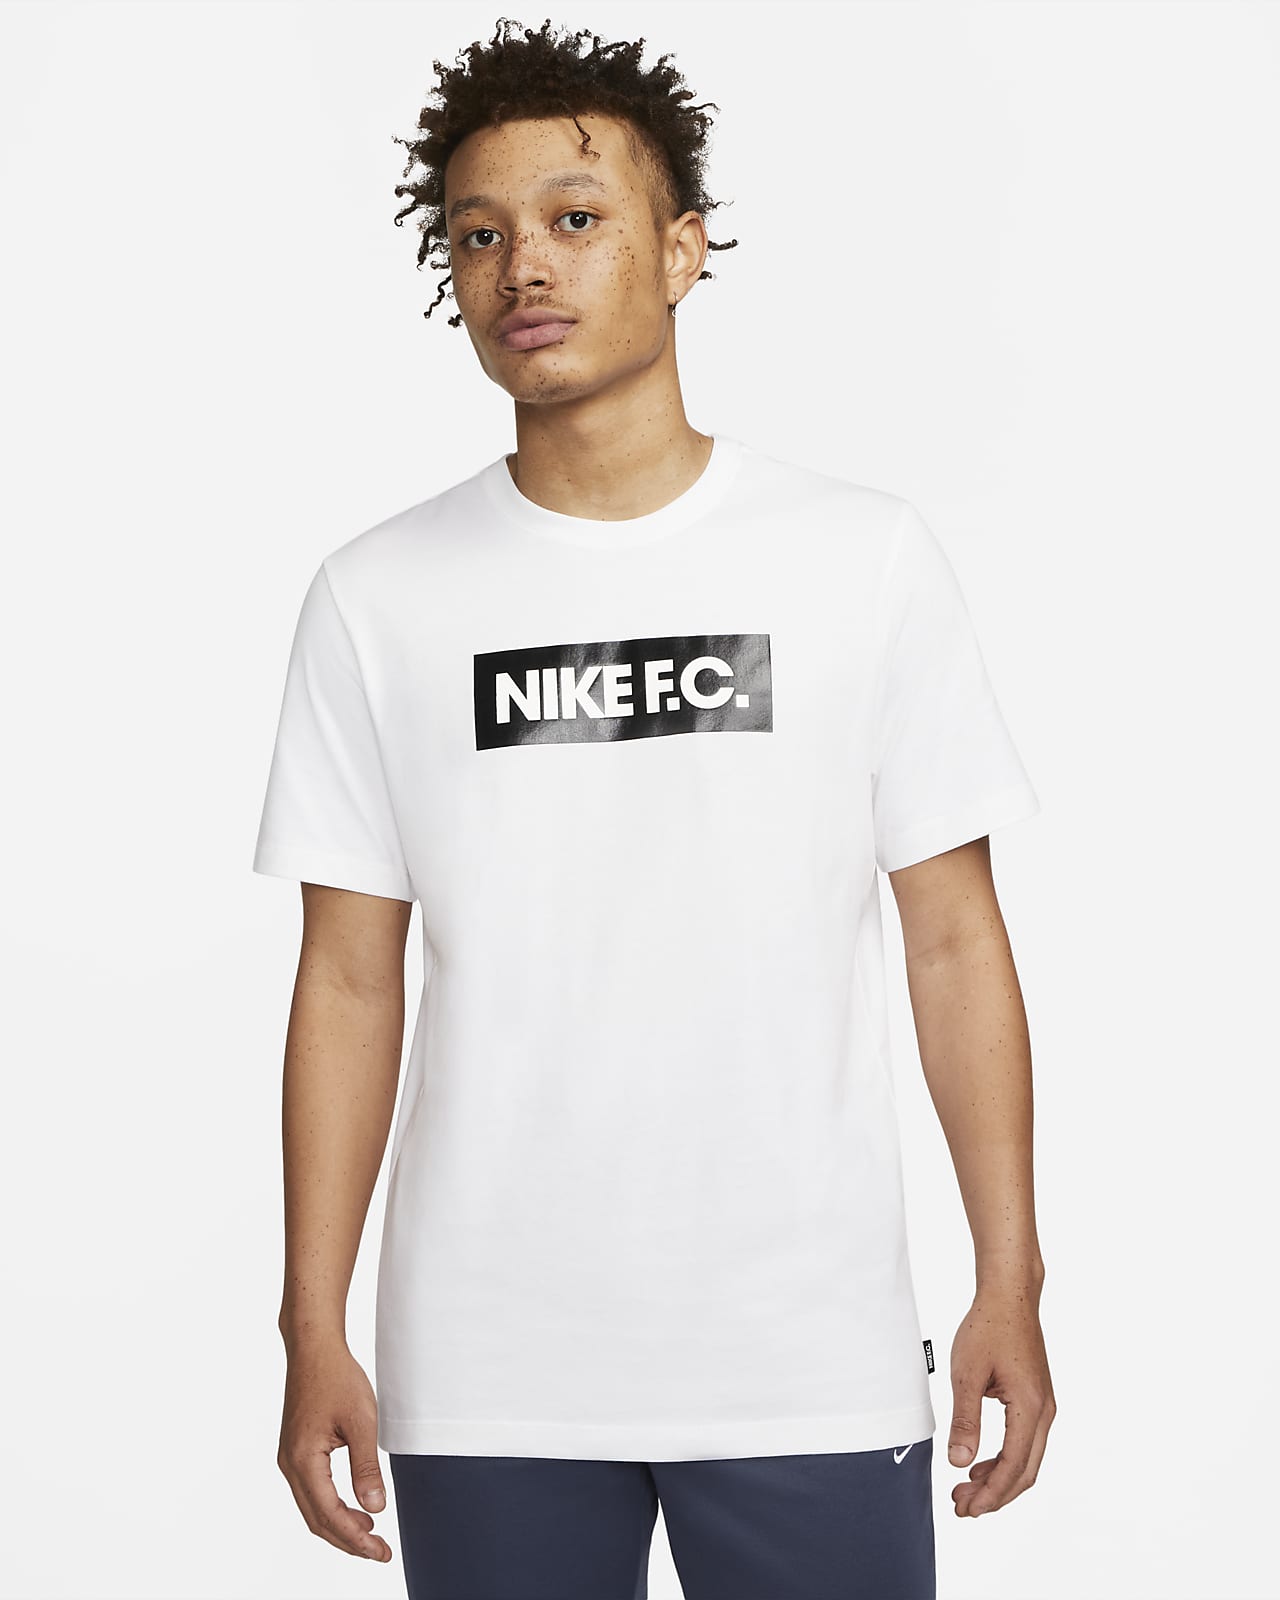 aankomst levenslang Sportman Nike F.C. Men's Football T-Shirt. Nike AT